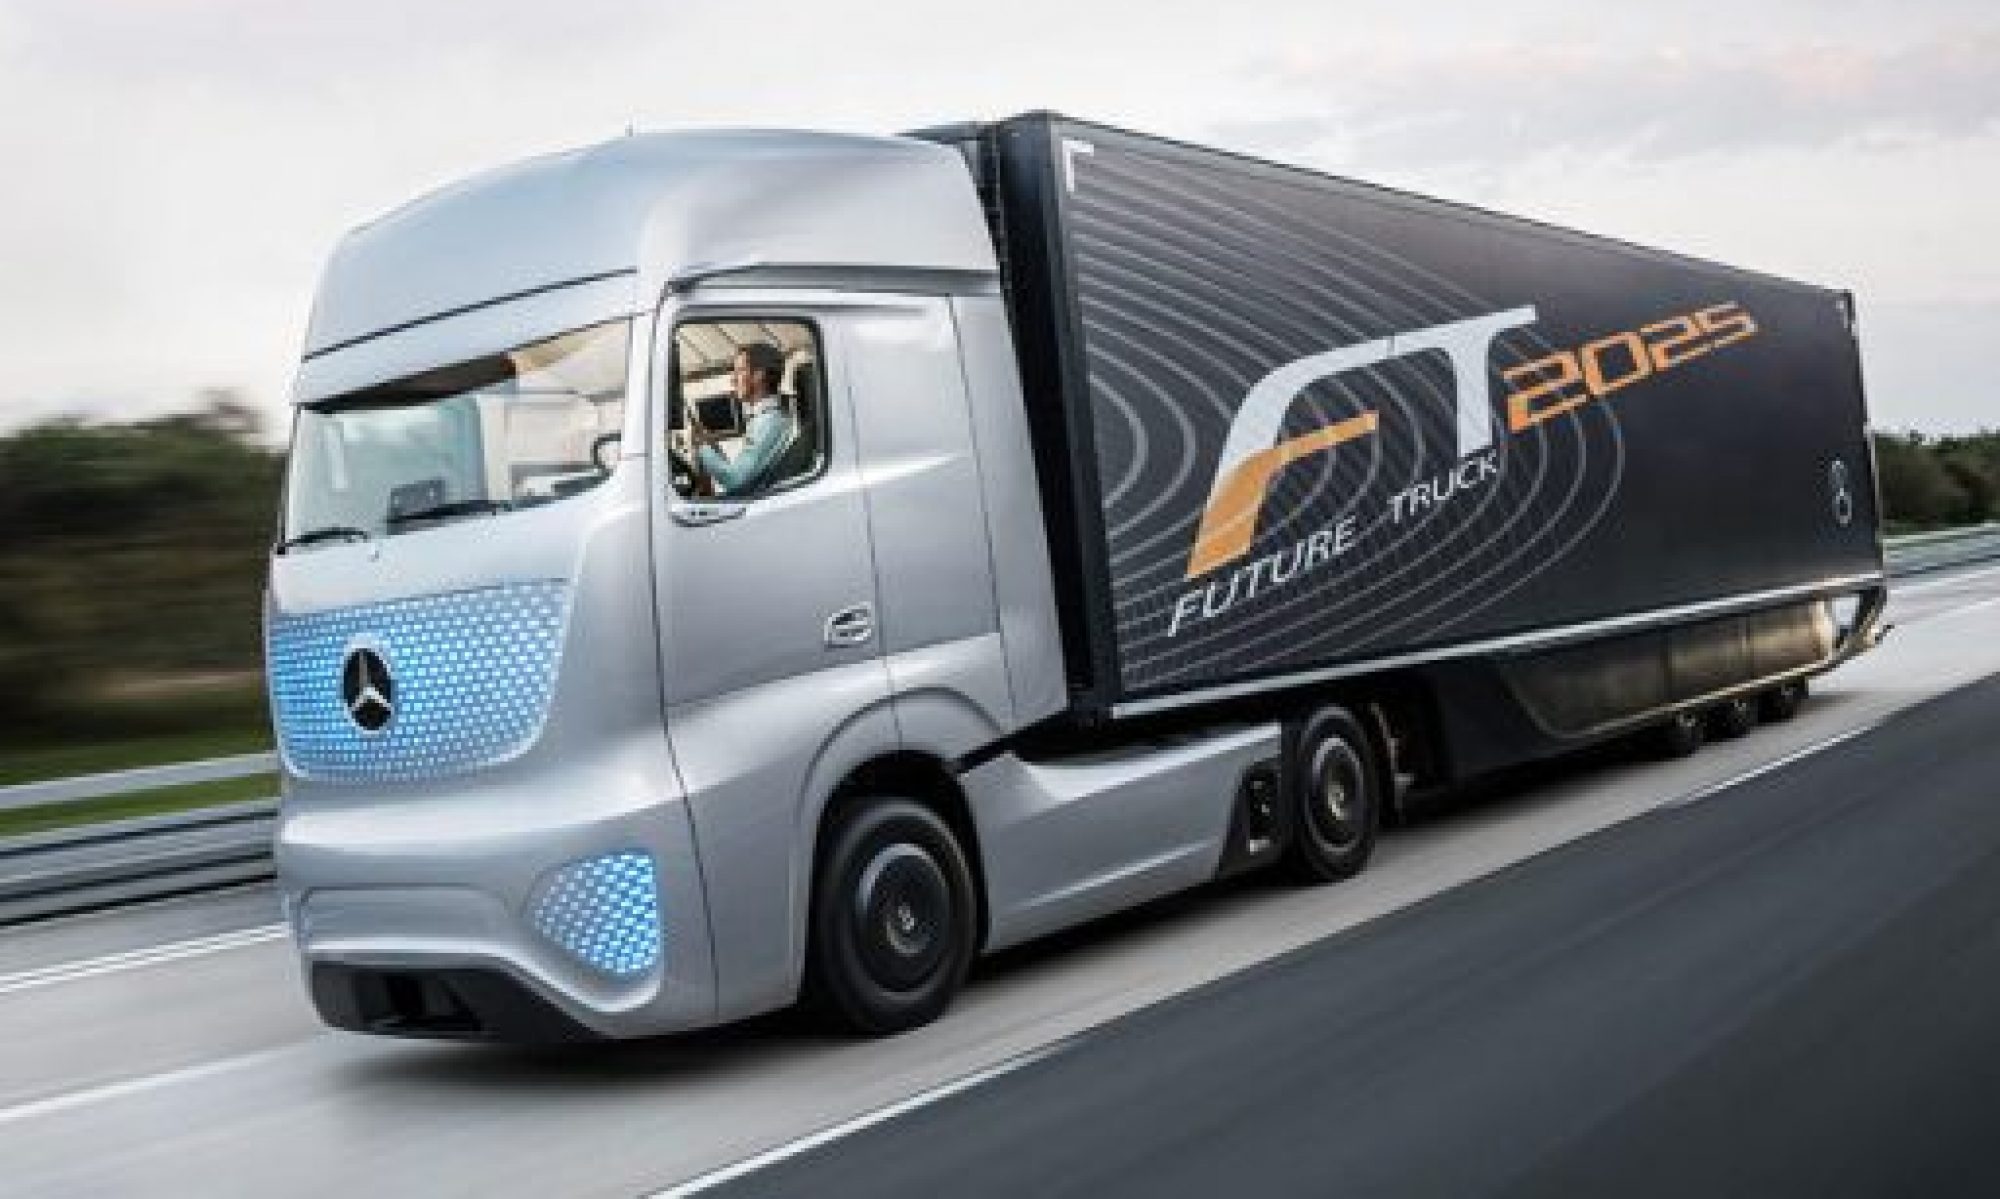 cropped-cropped-01-Mercedes-Benz-Autonomous-Truck-Logistic-Future-Truck-2025-1180x6862-1180x6861.jpg